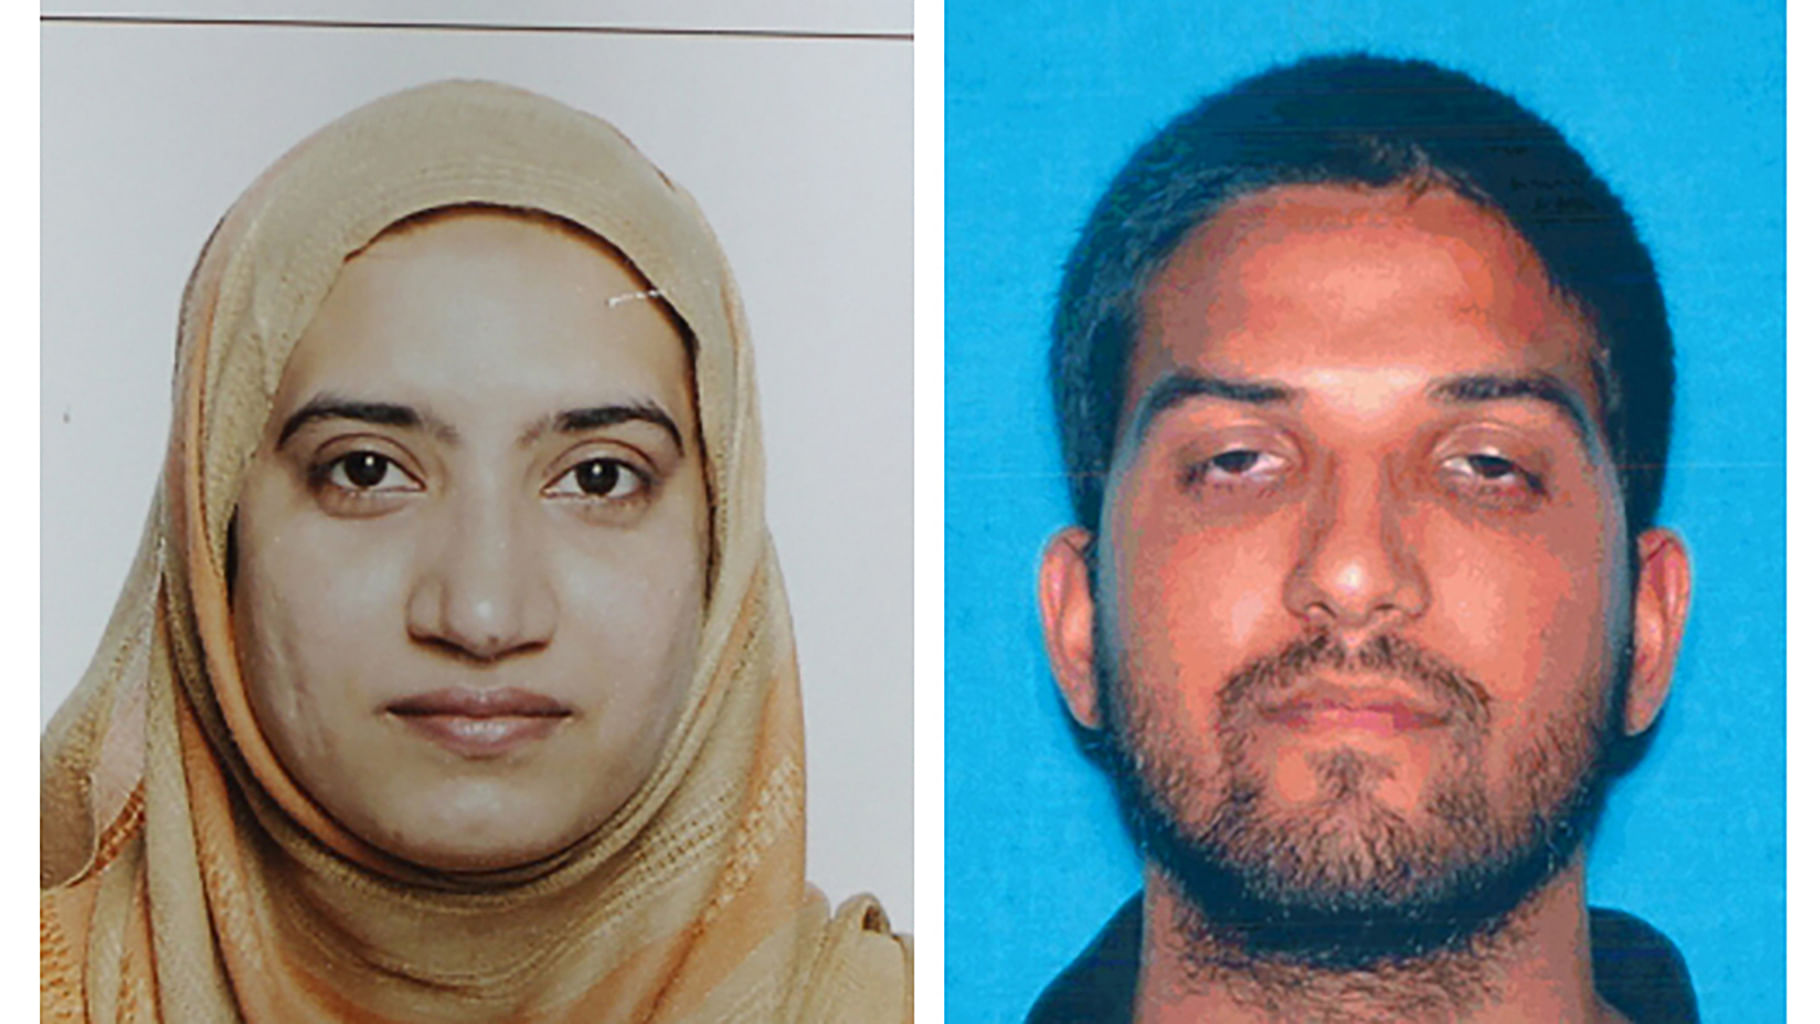  California shooting suspects Tashfeen Malik (left) and Syed Rizwan Farook (right). (Photo: AP)